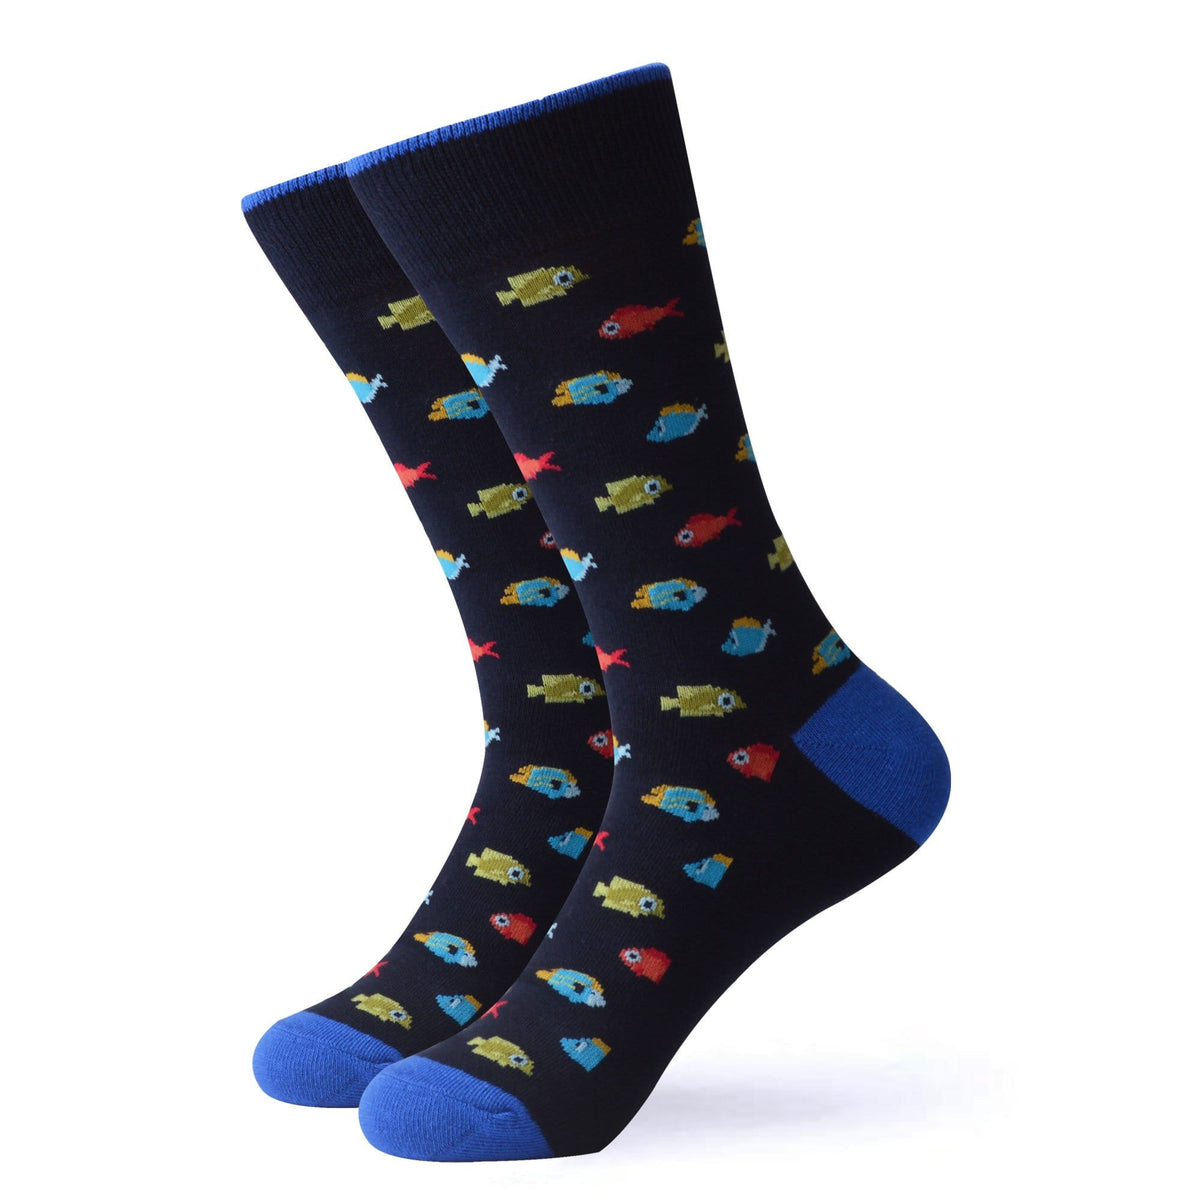 WestSocks - A Lot of Fish Socks